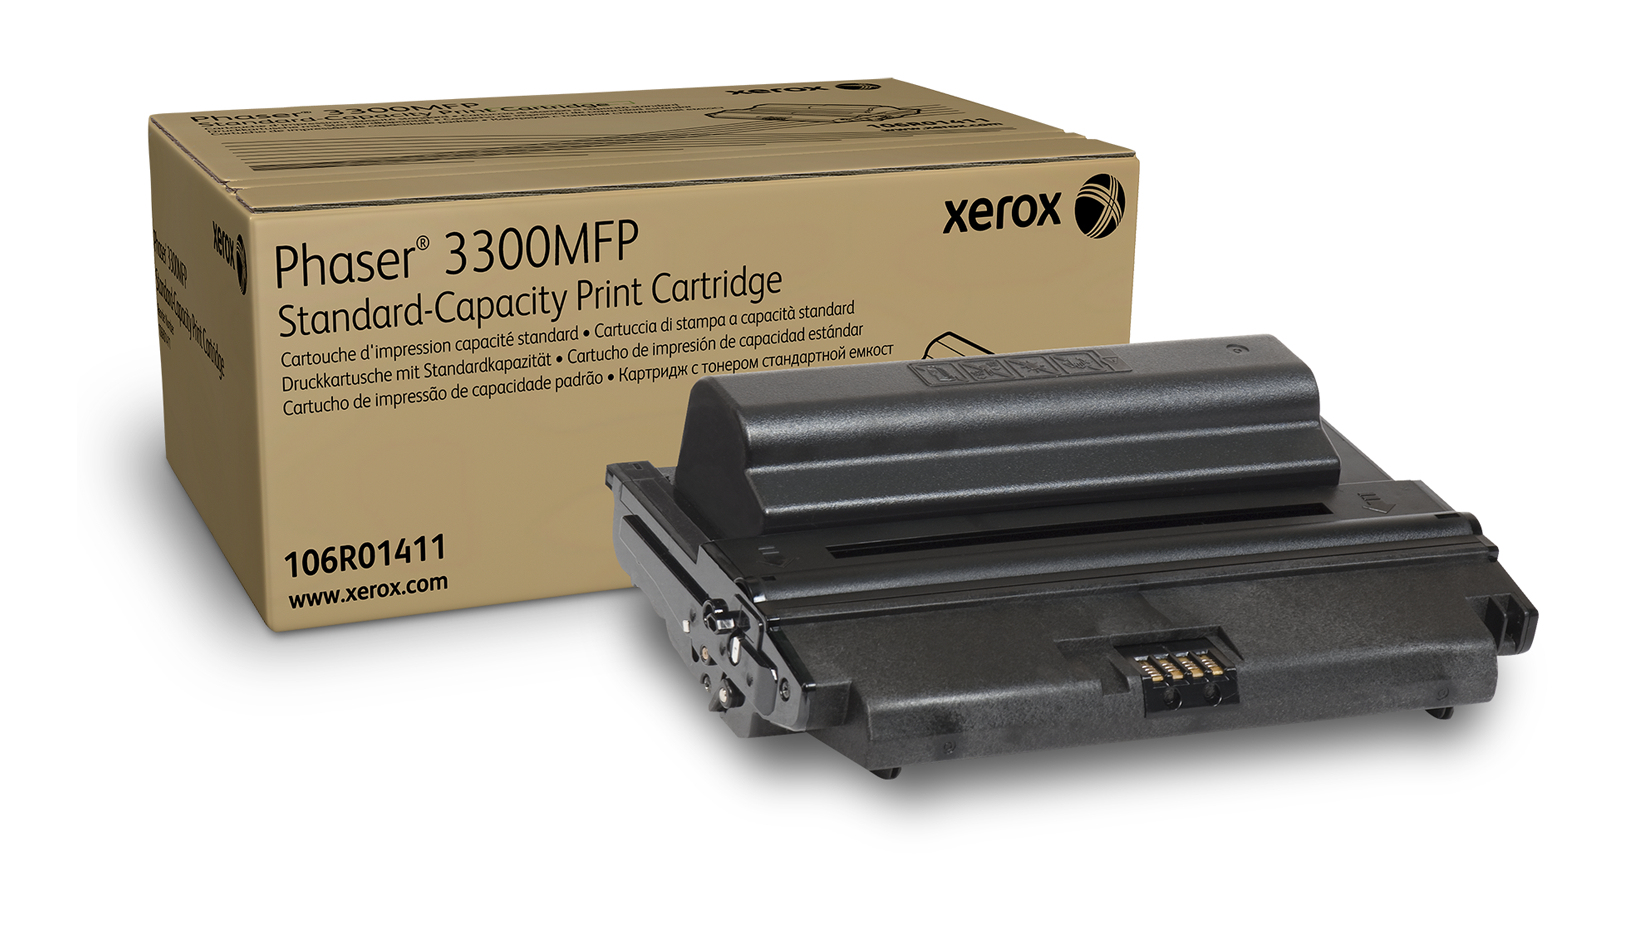 Xerox 106R01411 toner cartridge Laser cartridge 4000 pages Black